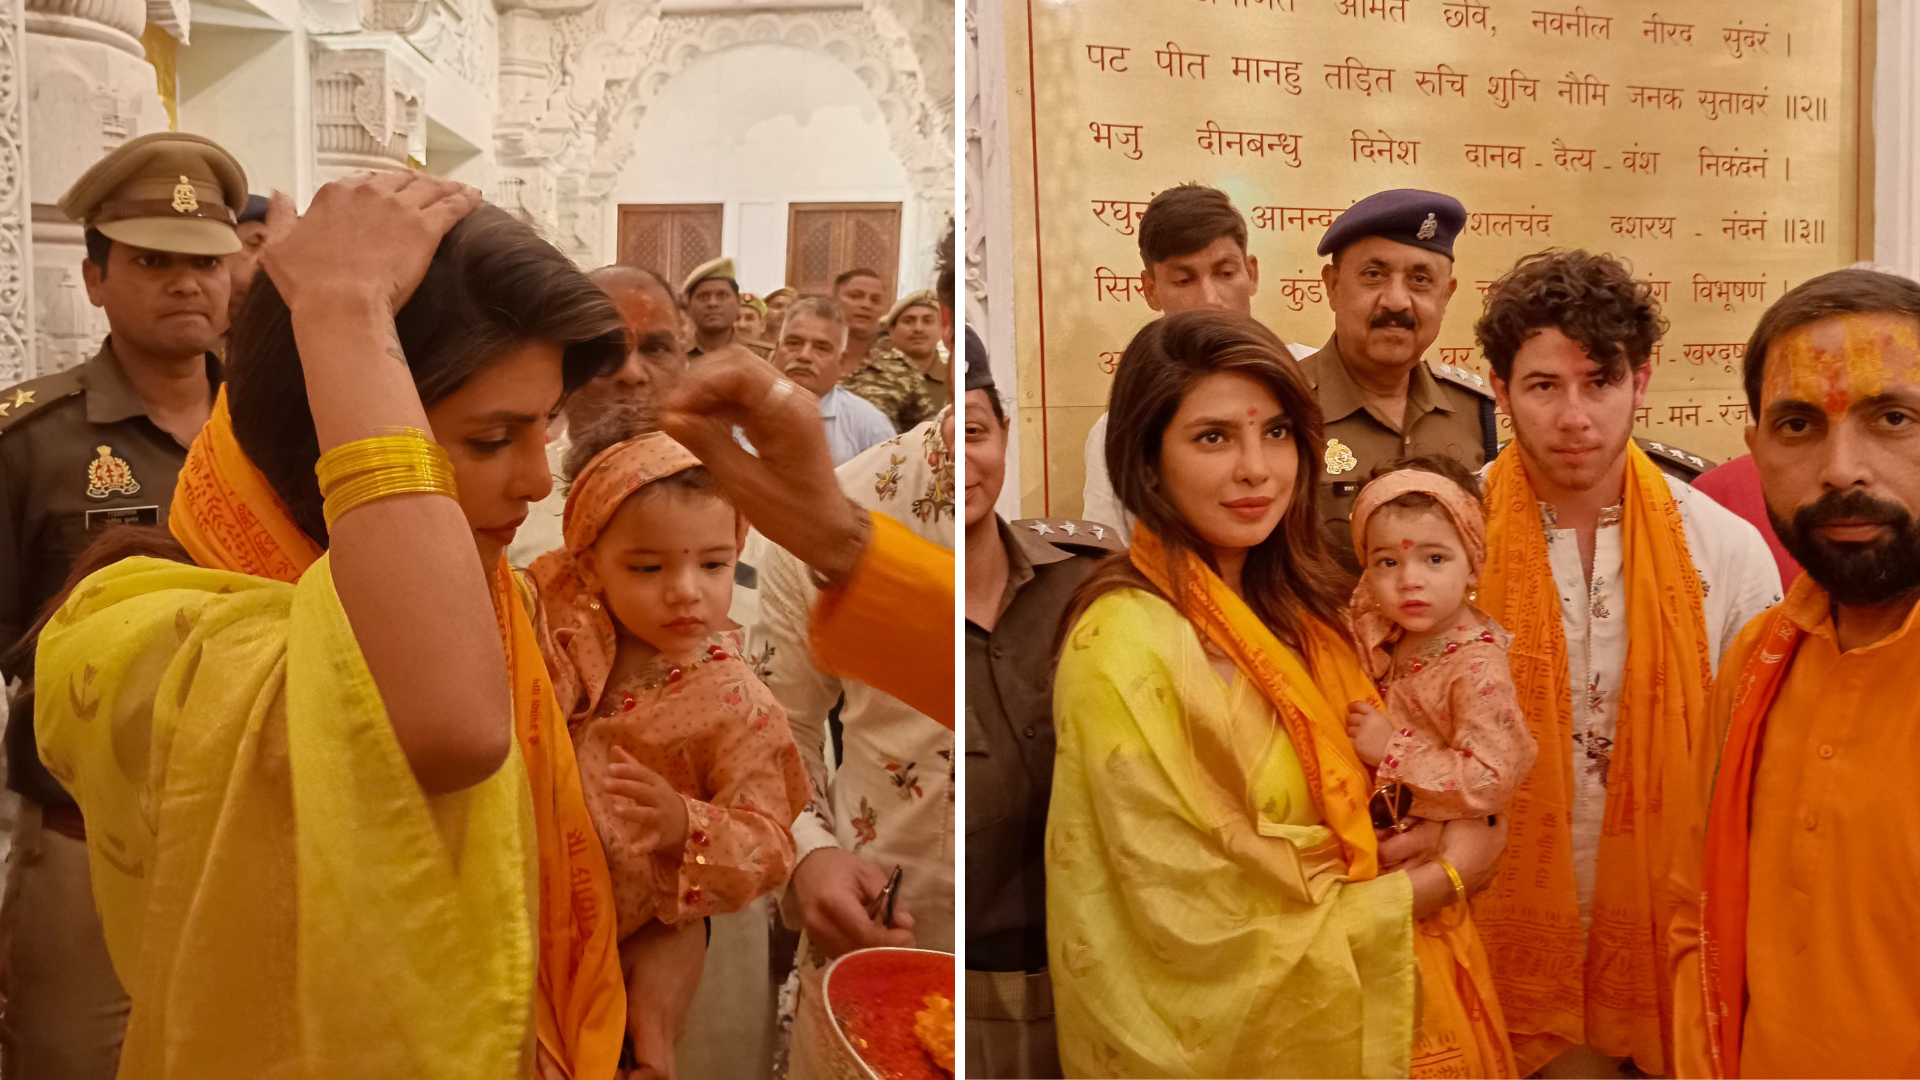 Priyanka Chopra Seeks Blessings At Ram Temple In Ayodhya With Husband Nick Jonas And Daughter Maltie Marie- See Pics!